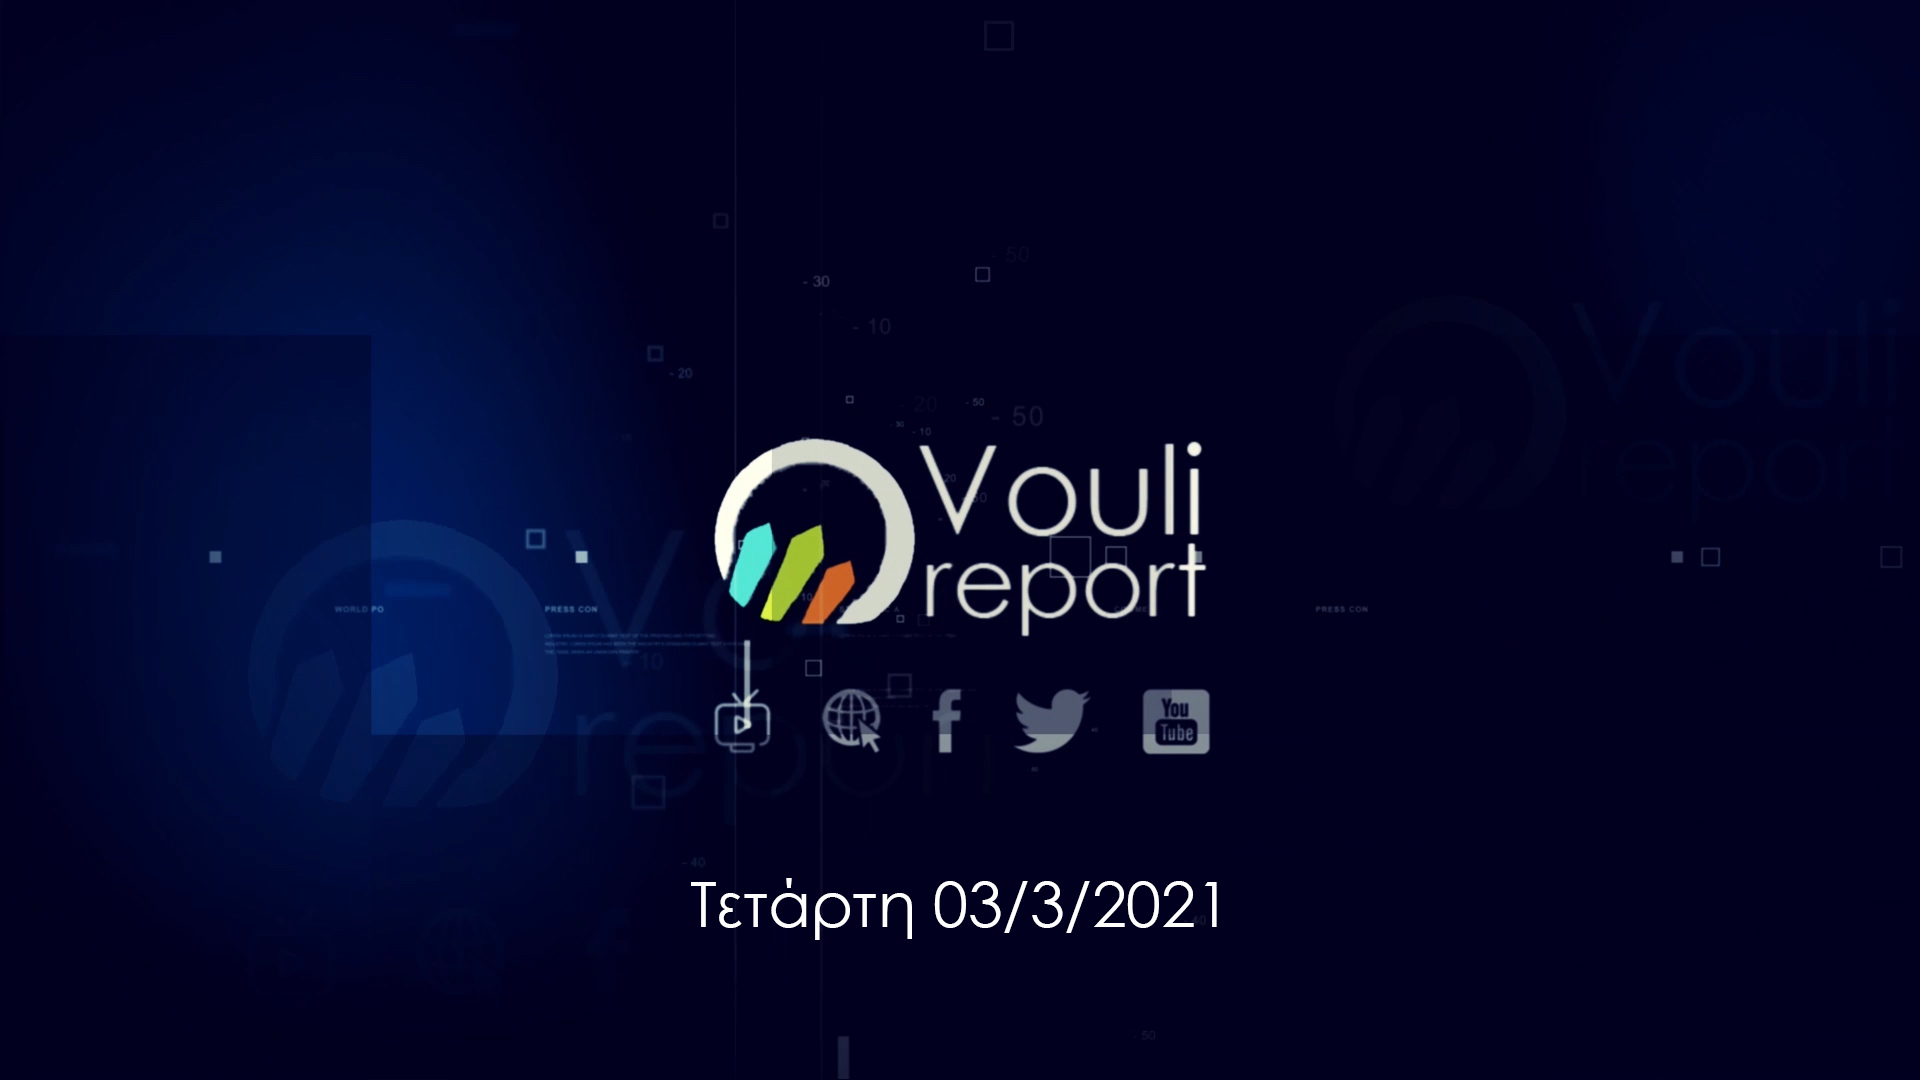 Vouli report | 03/03/2021